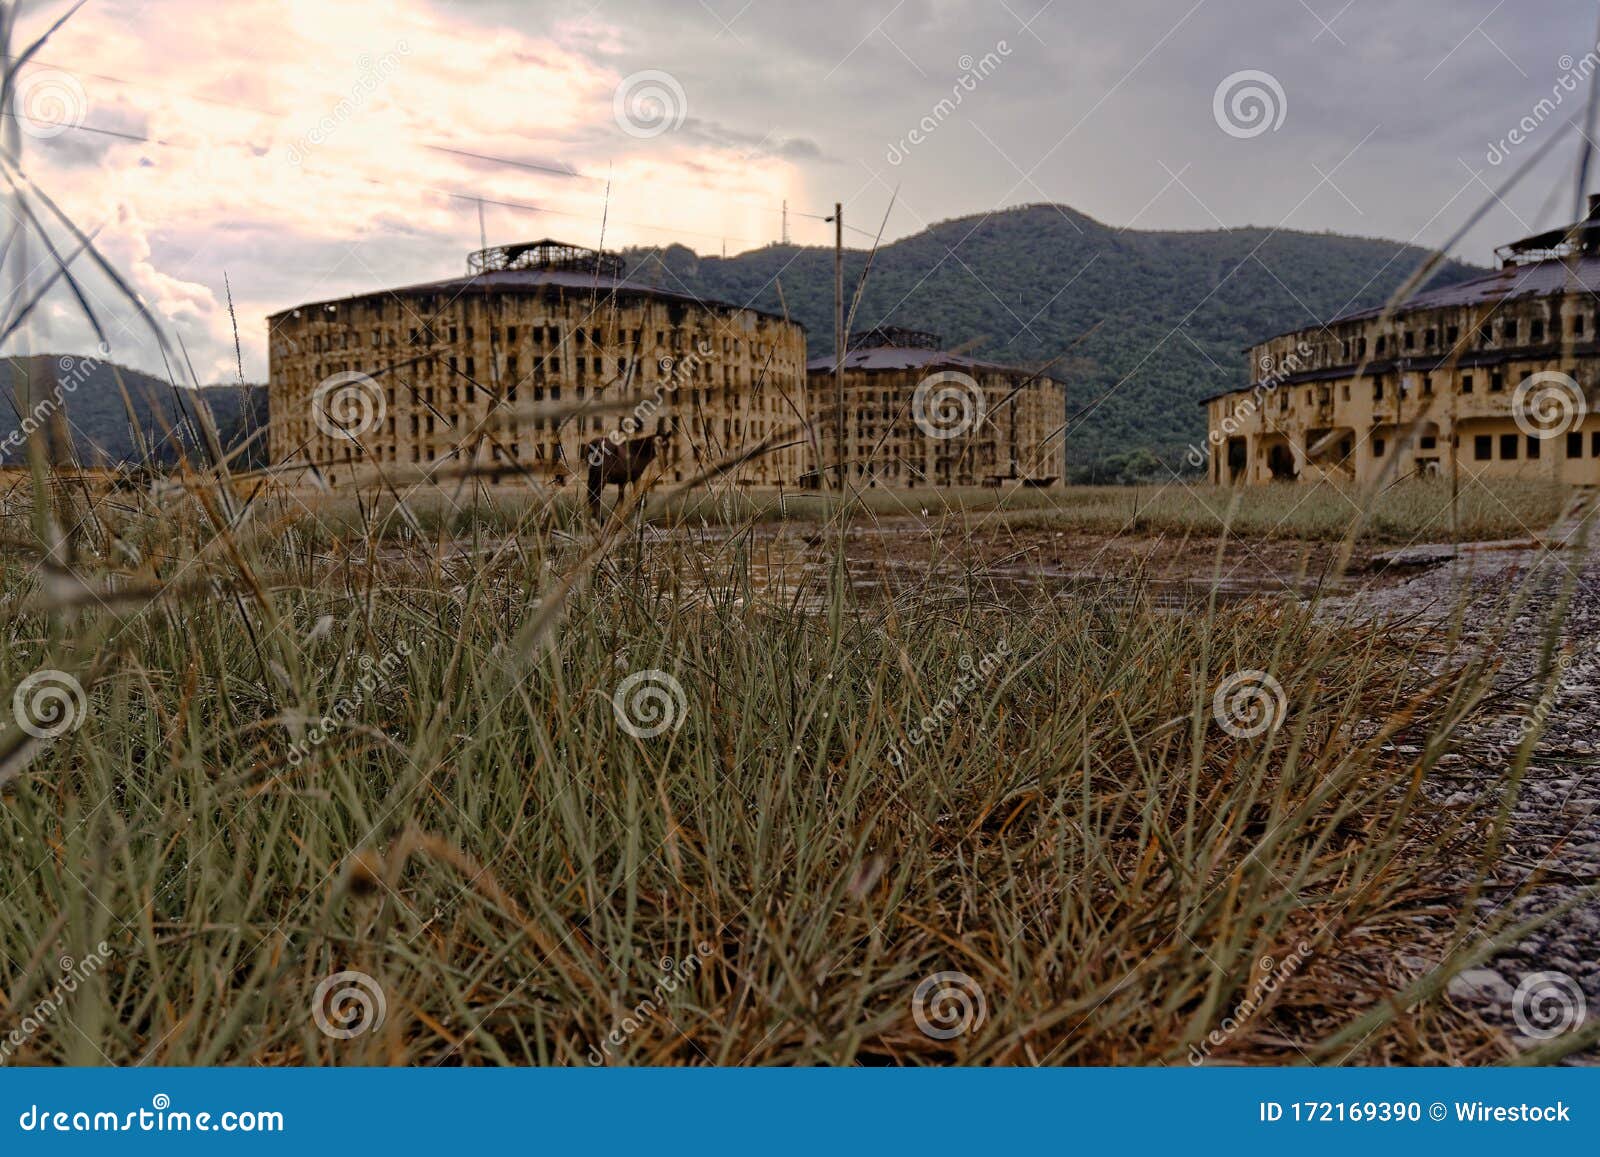 old presidio modelo prison building on the isle of youth, cuba